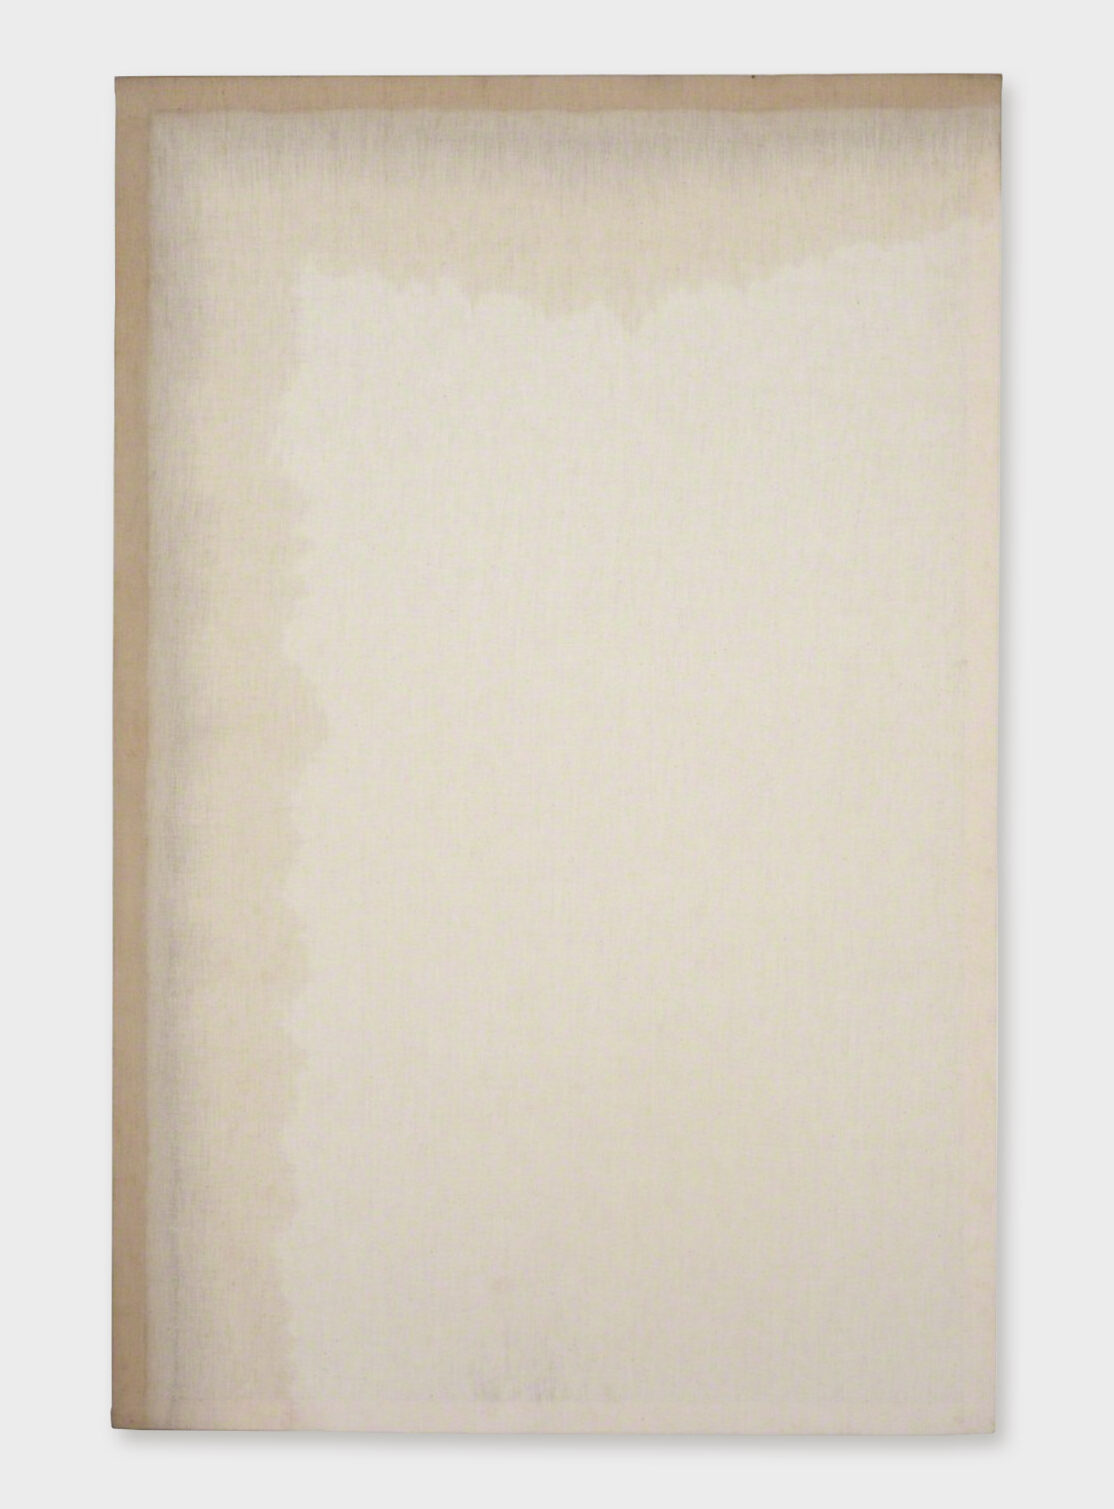 Koji Enokura, Untitled, 1978, Waste oil on cotton fabric, 117 × 76 × 5 cm © The Artist, Image Courtesy Tokyo Gallery + BTAP